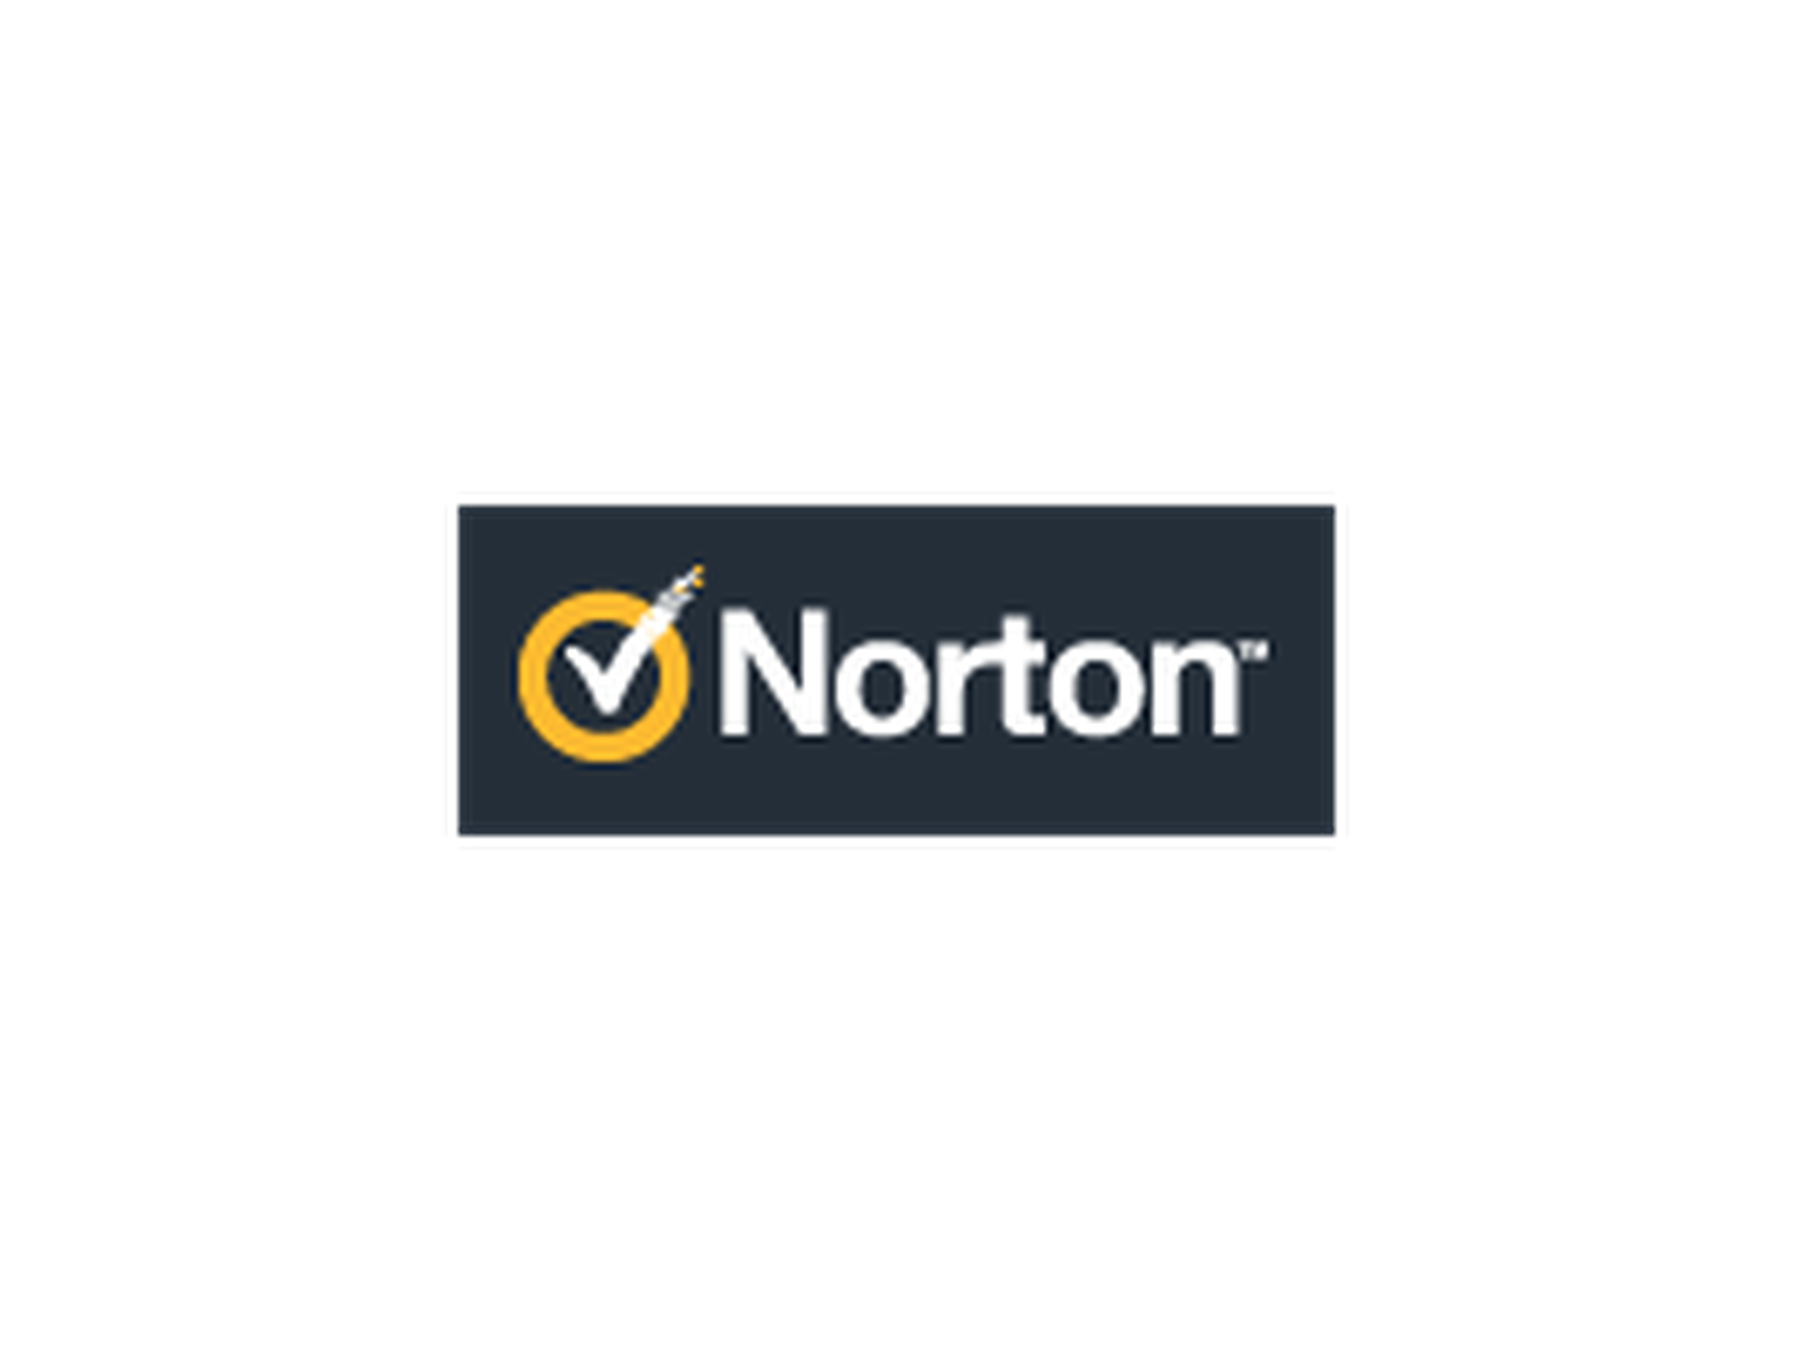 Norton rabatkoder